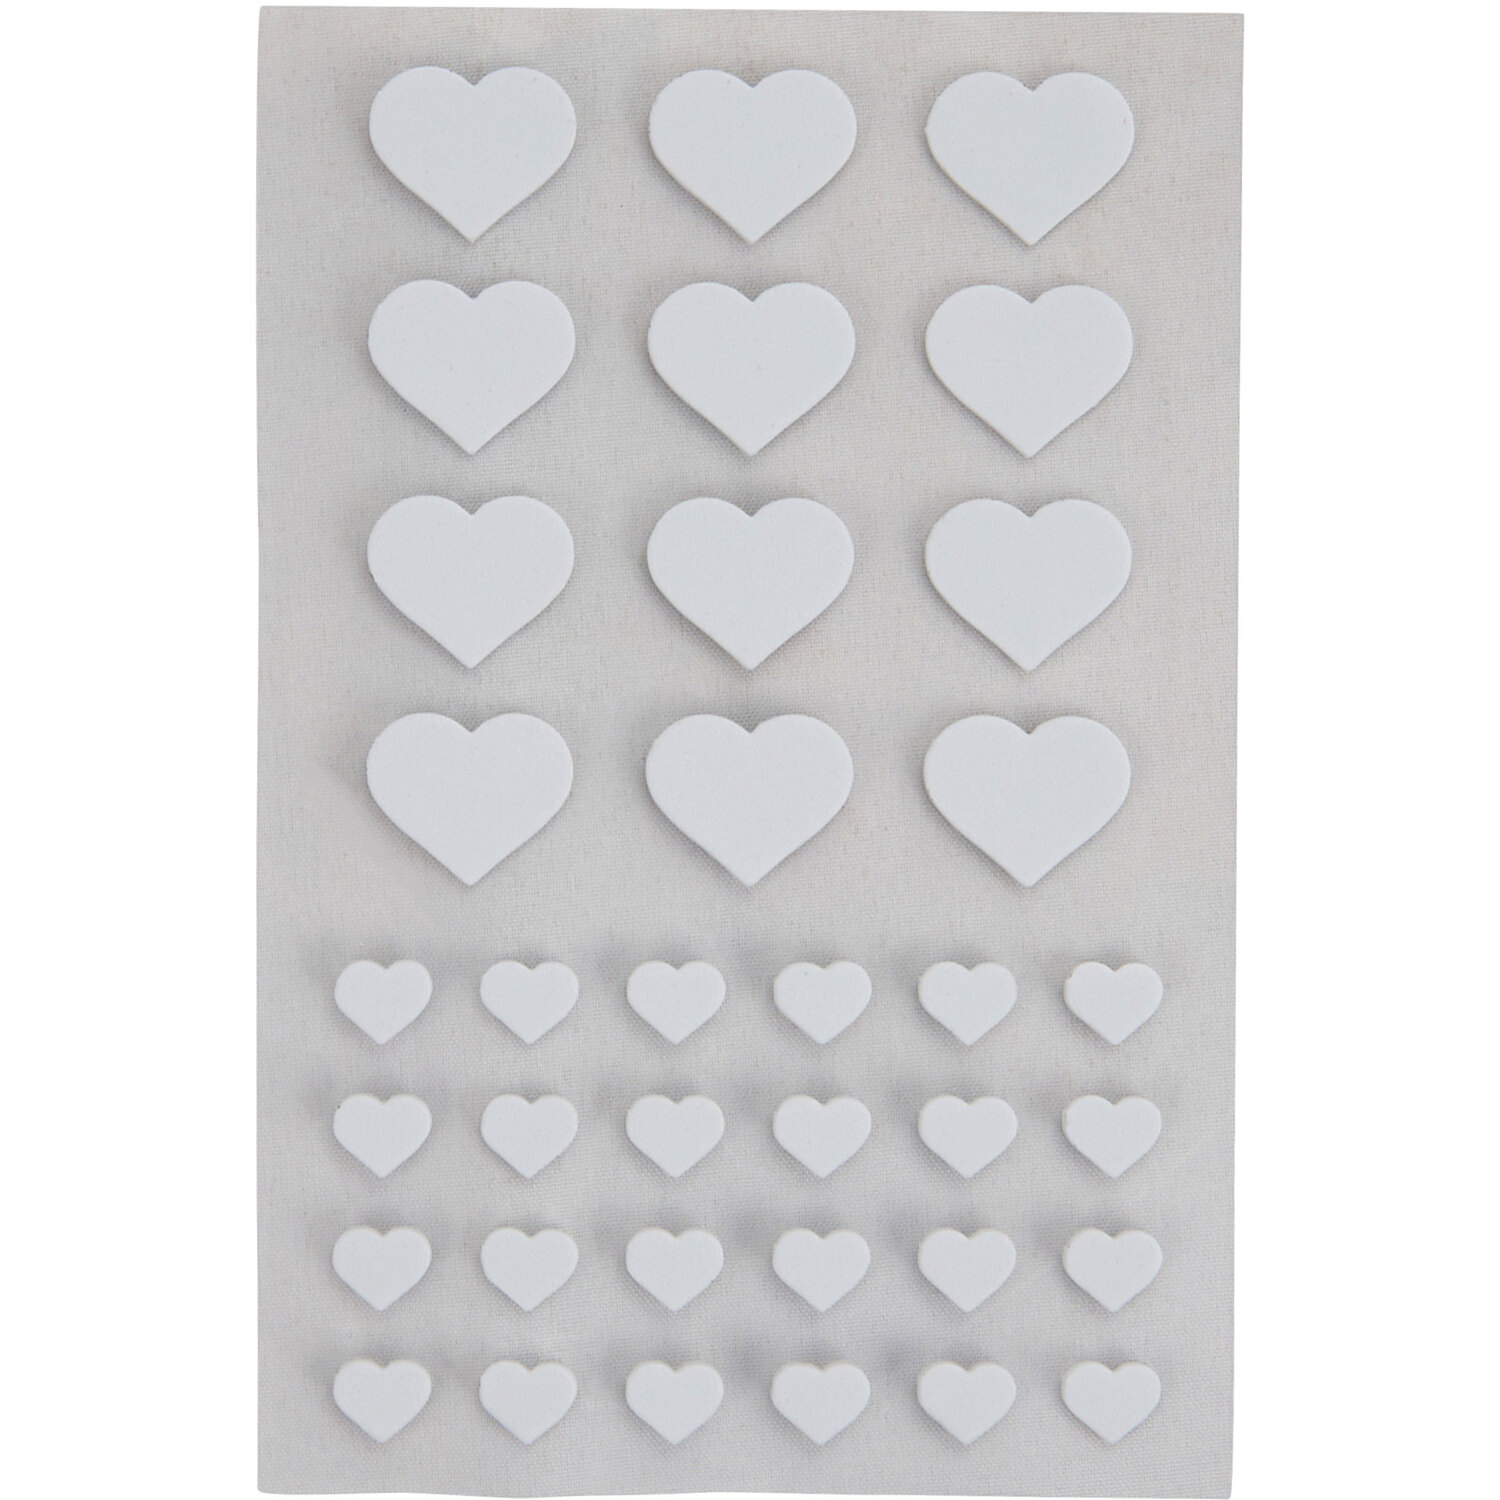 Heart Mix Match Cards Kit Image 2